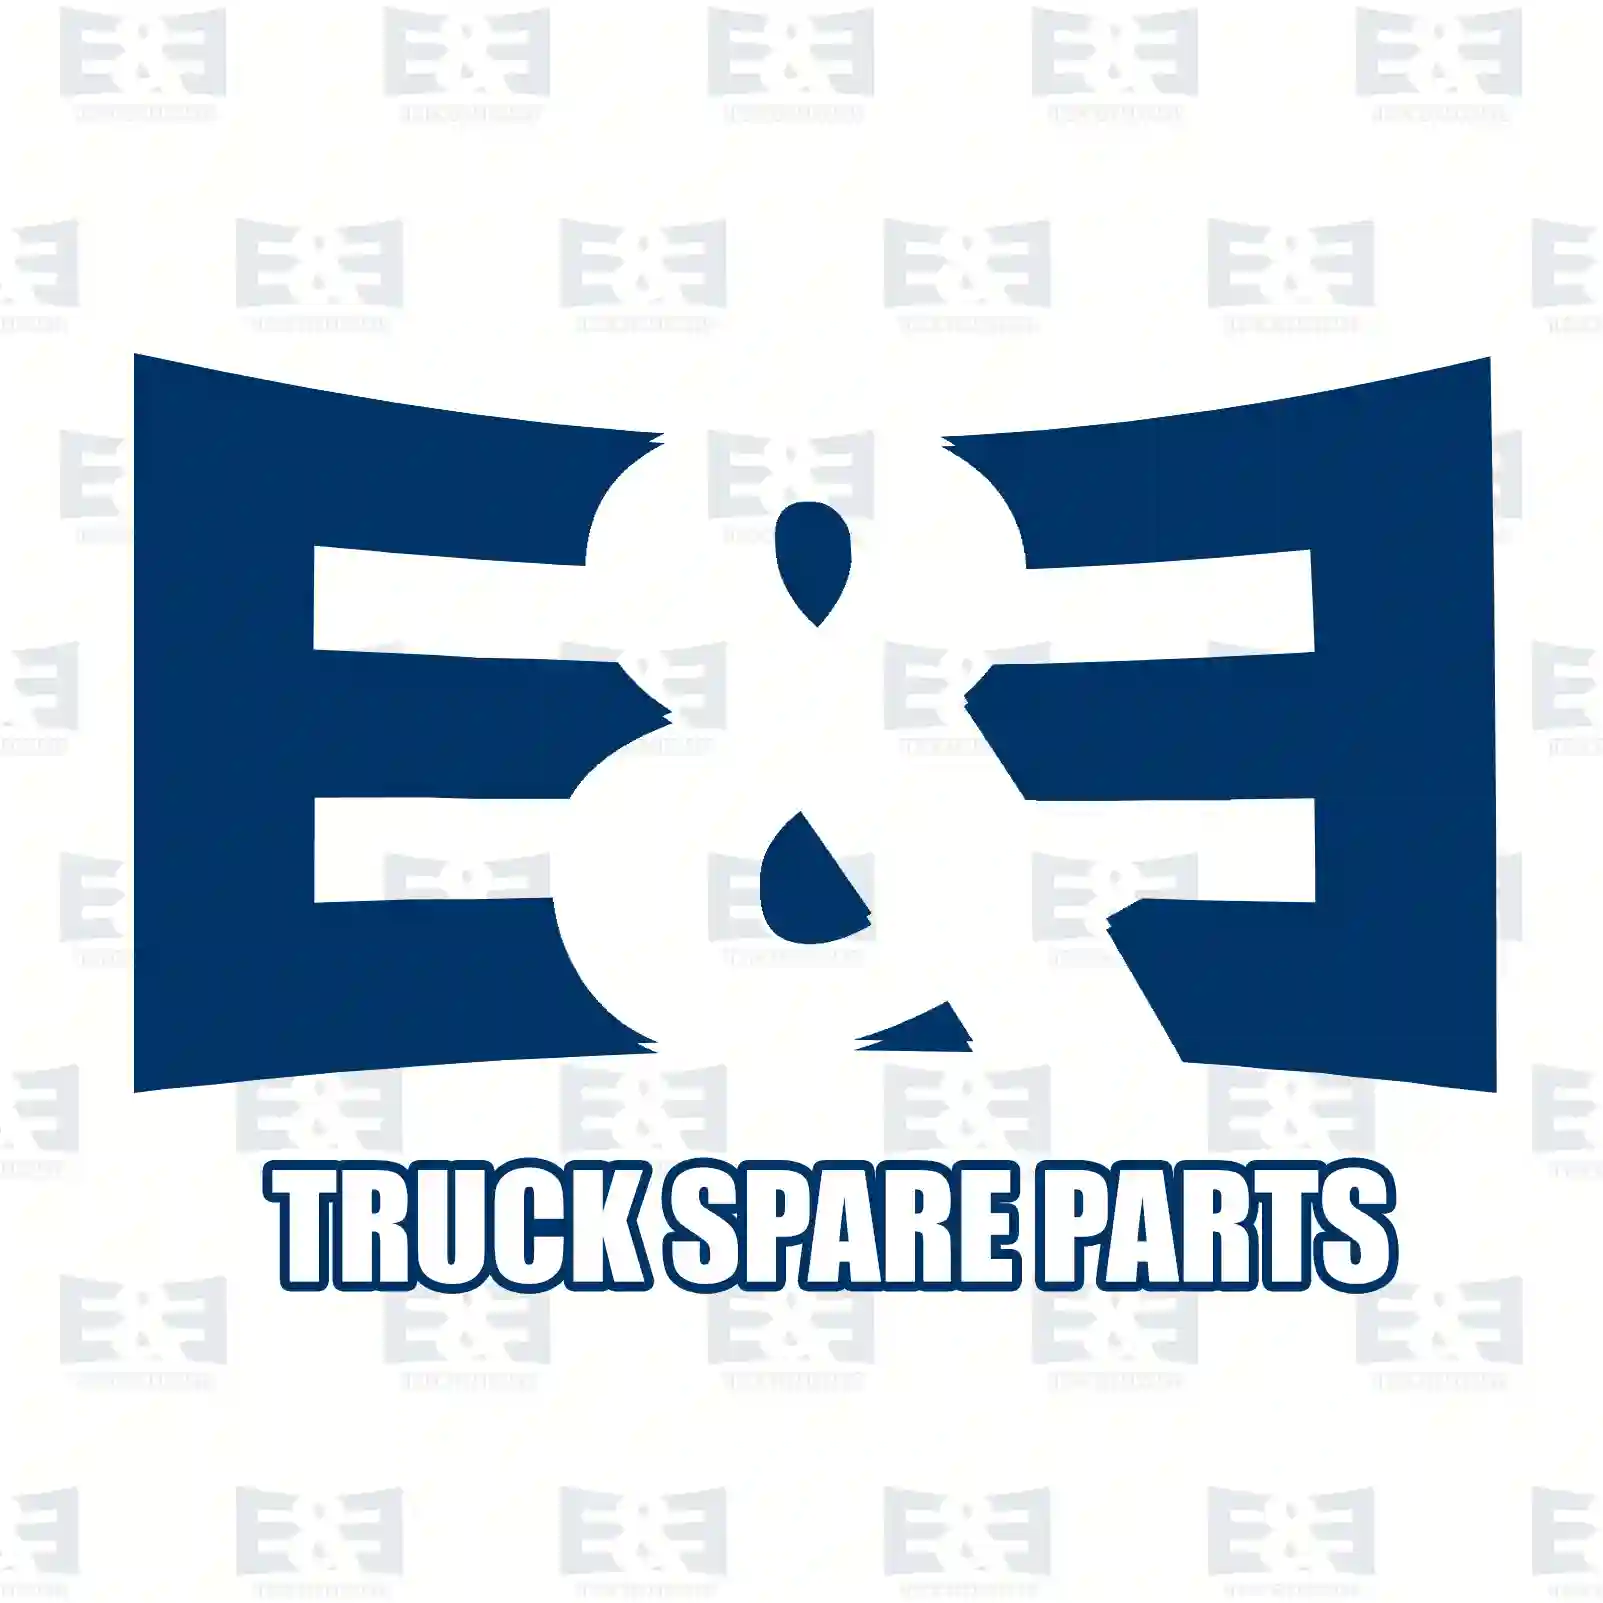 Rear Axle, Complete Spider, EE No 2E2270762 ,  oem no:1325064, 1450720, 174985, 1785125, 2119415, 334557 E&E Truck Spare Parts | Truck Spare Parts, Auotomotive Spare Parts